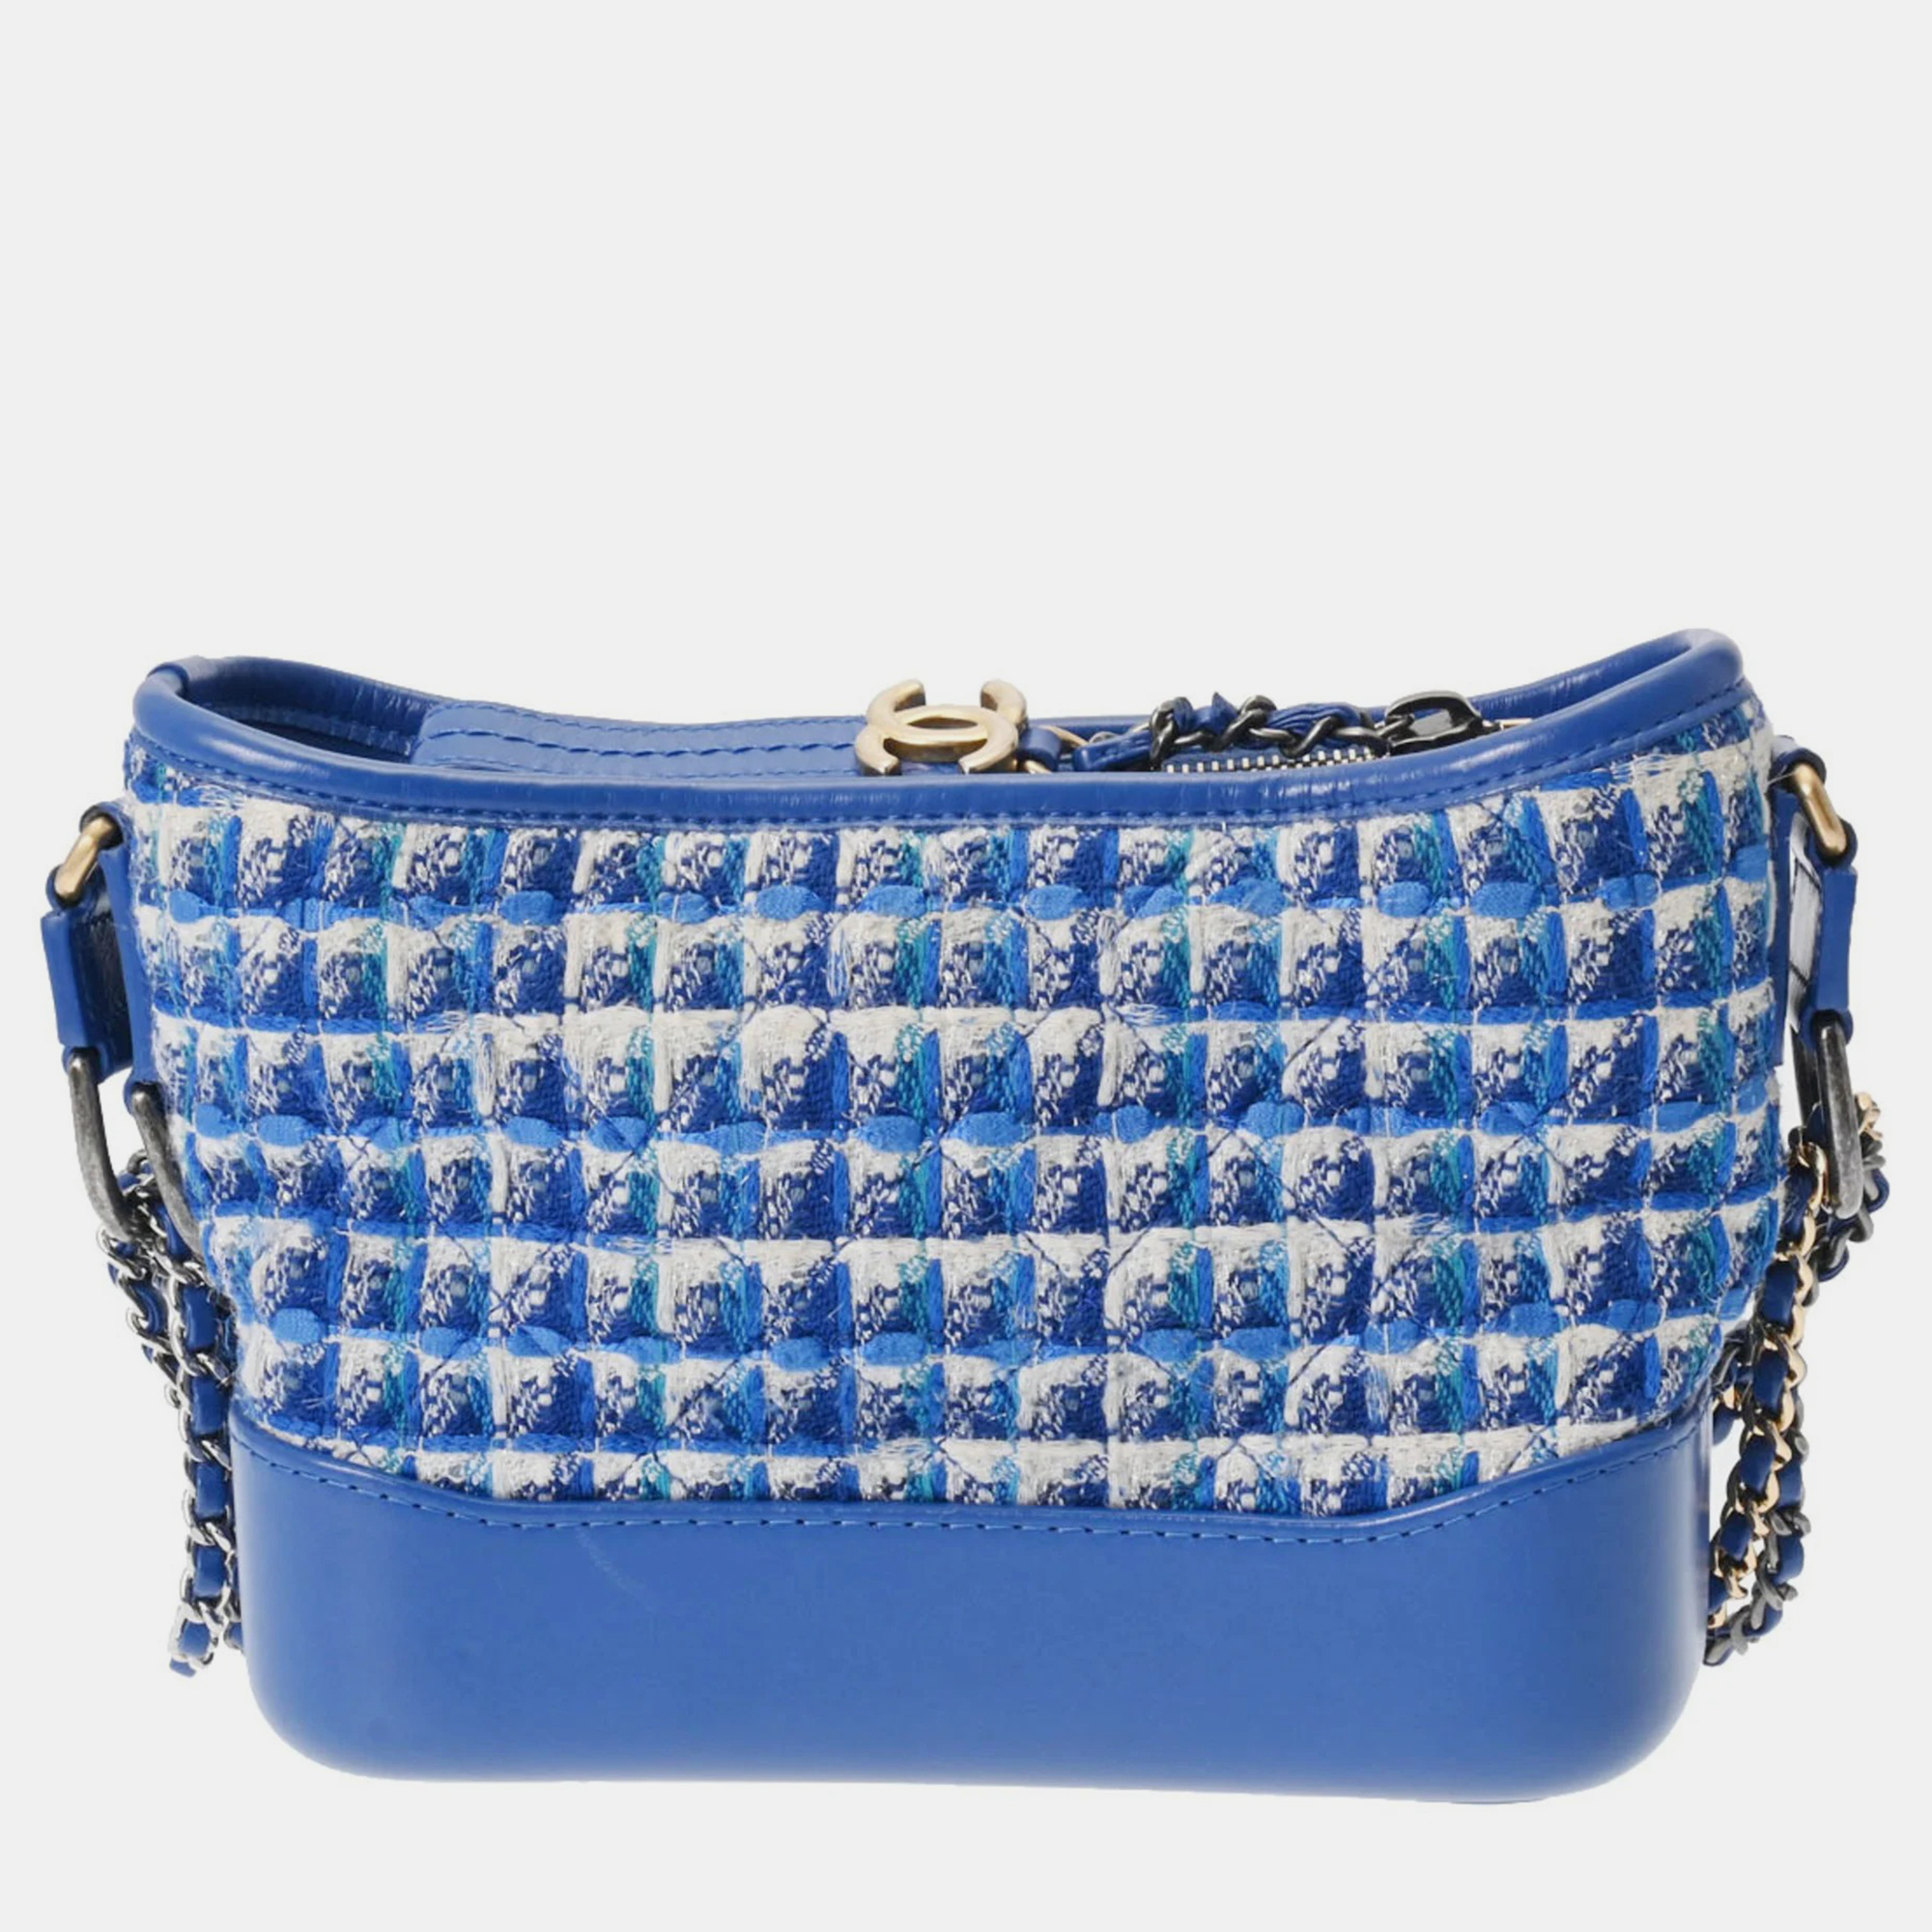 Chanel blue tweed/calf small gabrielle de chanel  hobo shoulder bag